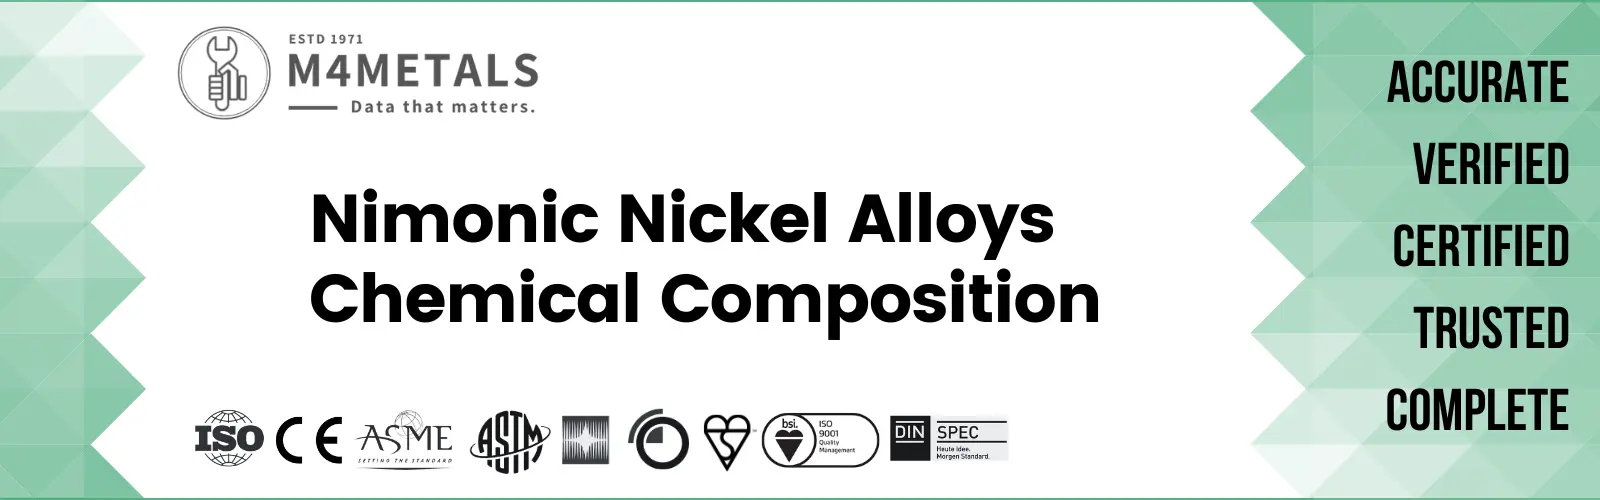 Nimonic Nickel-alloy Chemical Composition